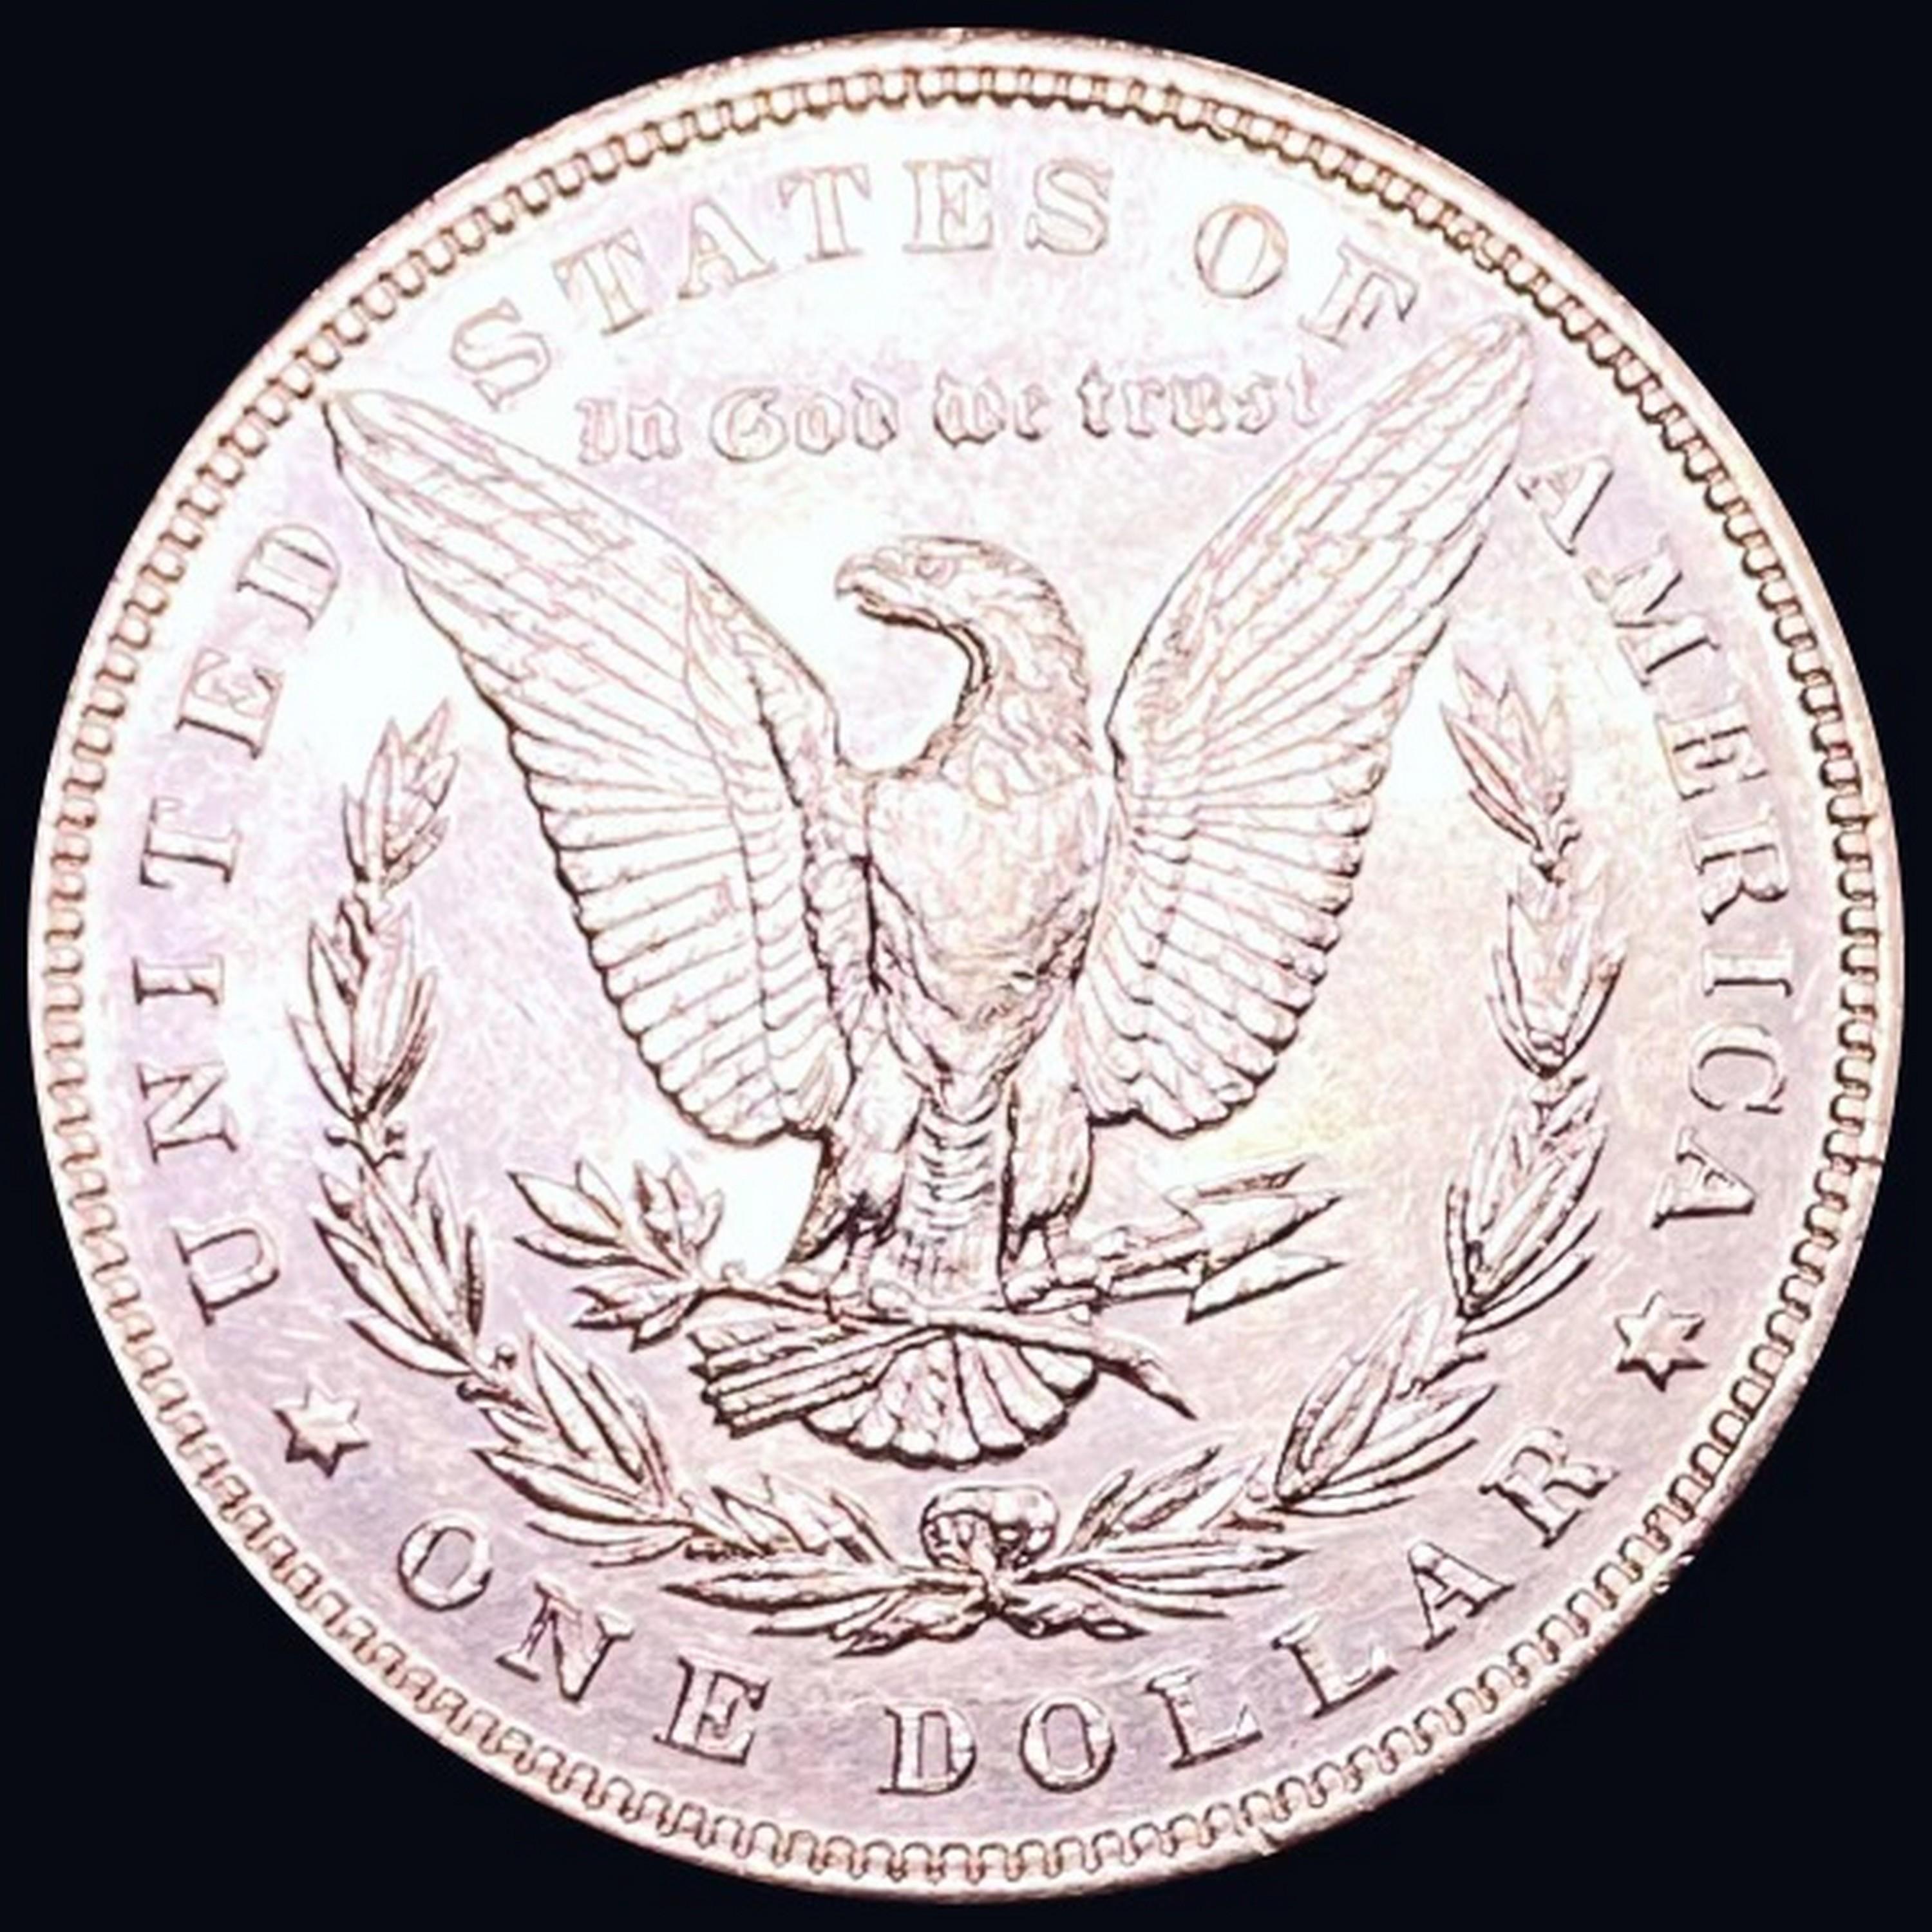 1899 Morgan Silver Dollar CHOICE PROOF